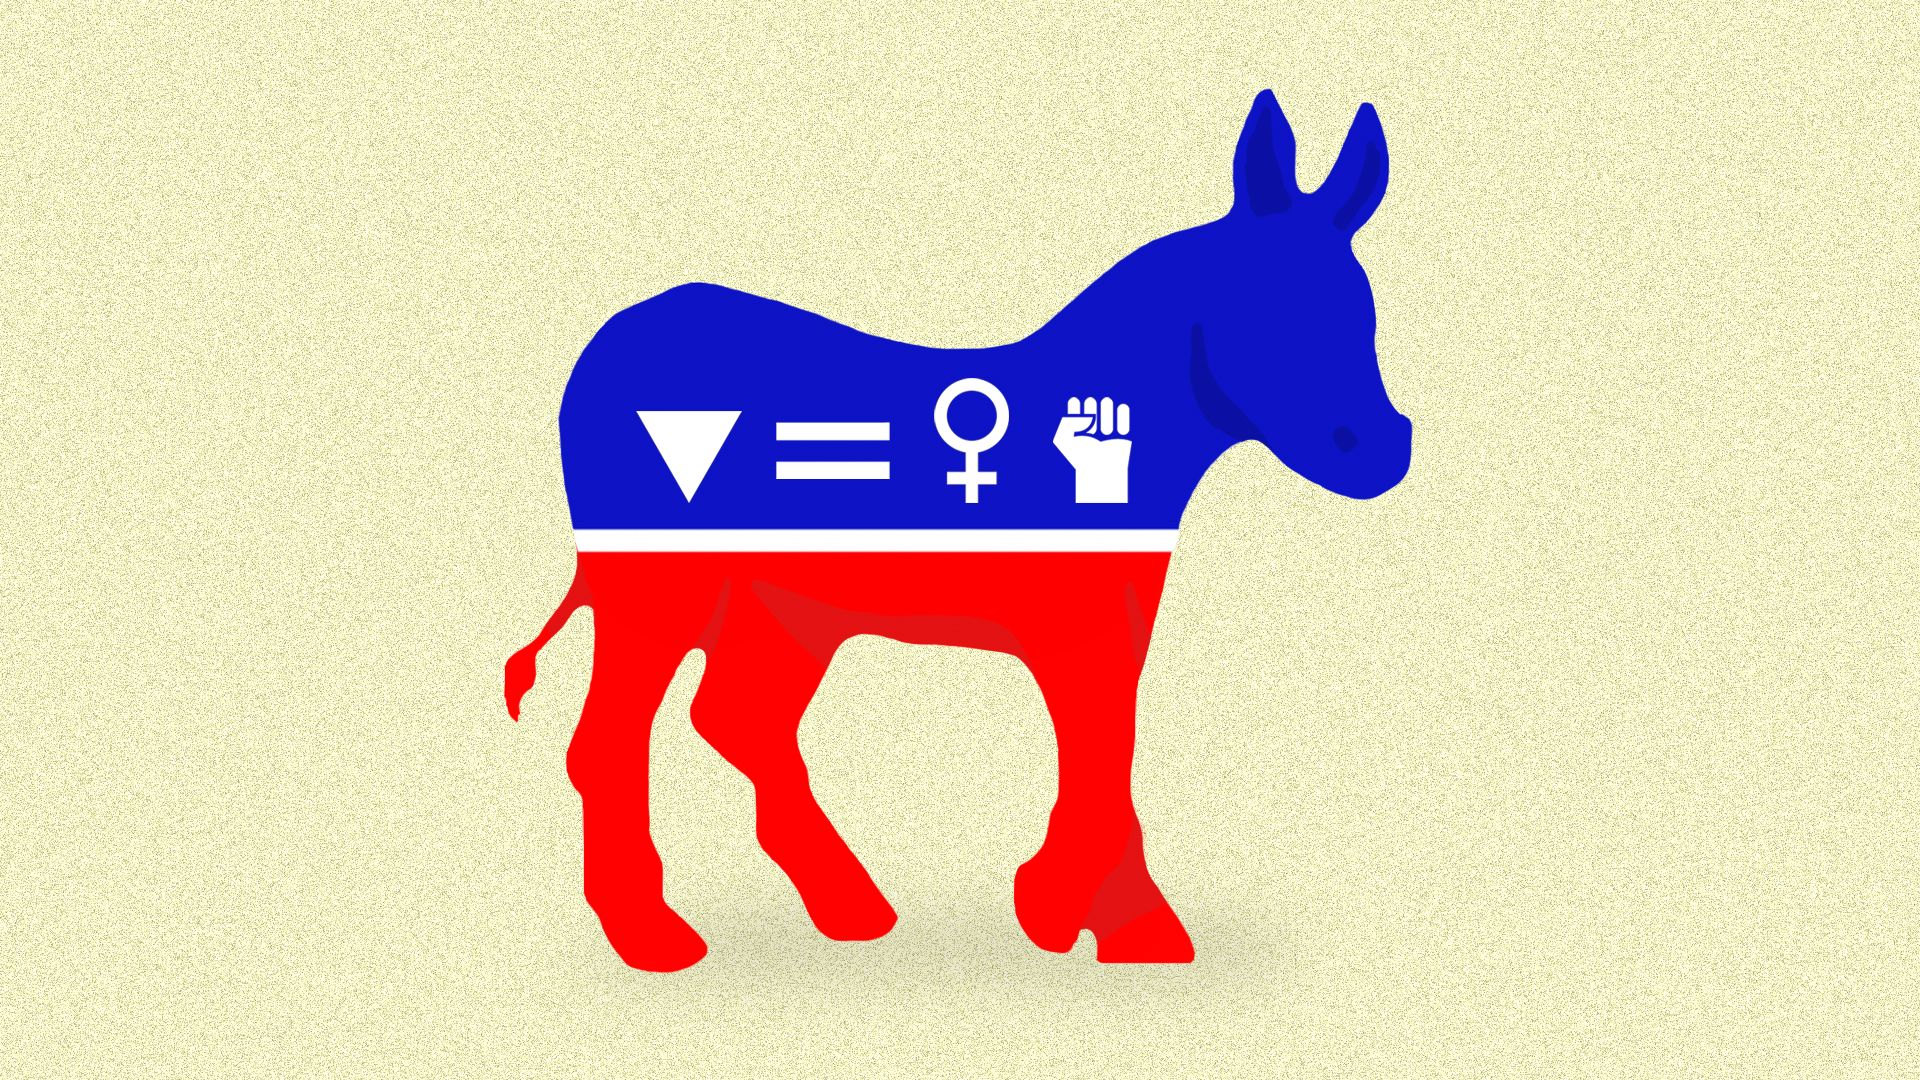 A Democratic donkey with symbols of identity politics